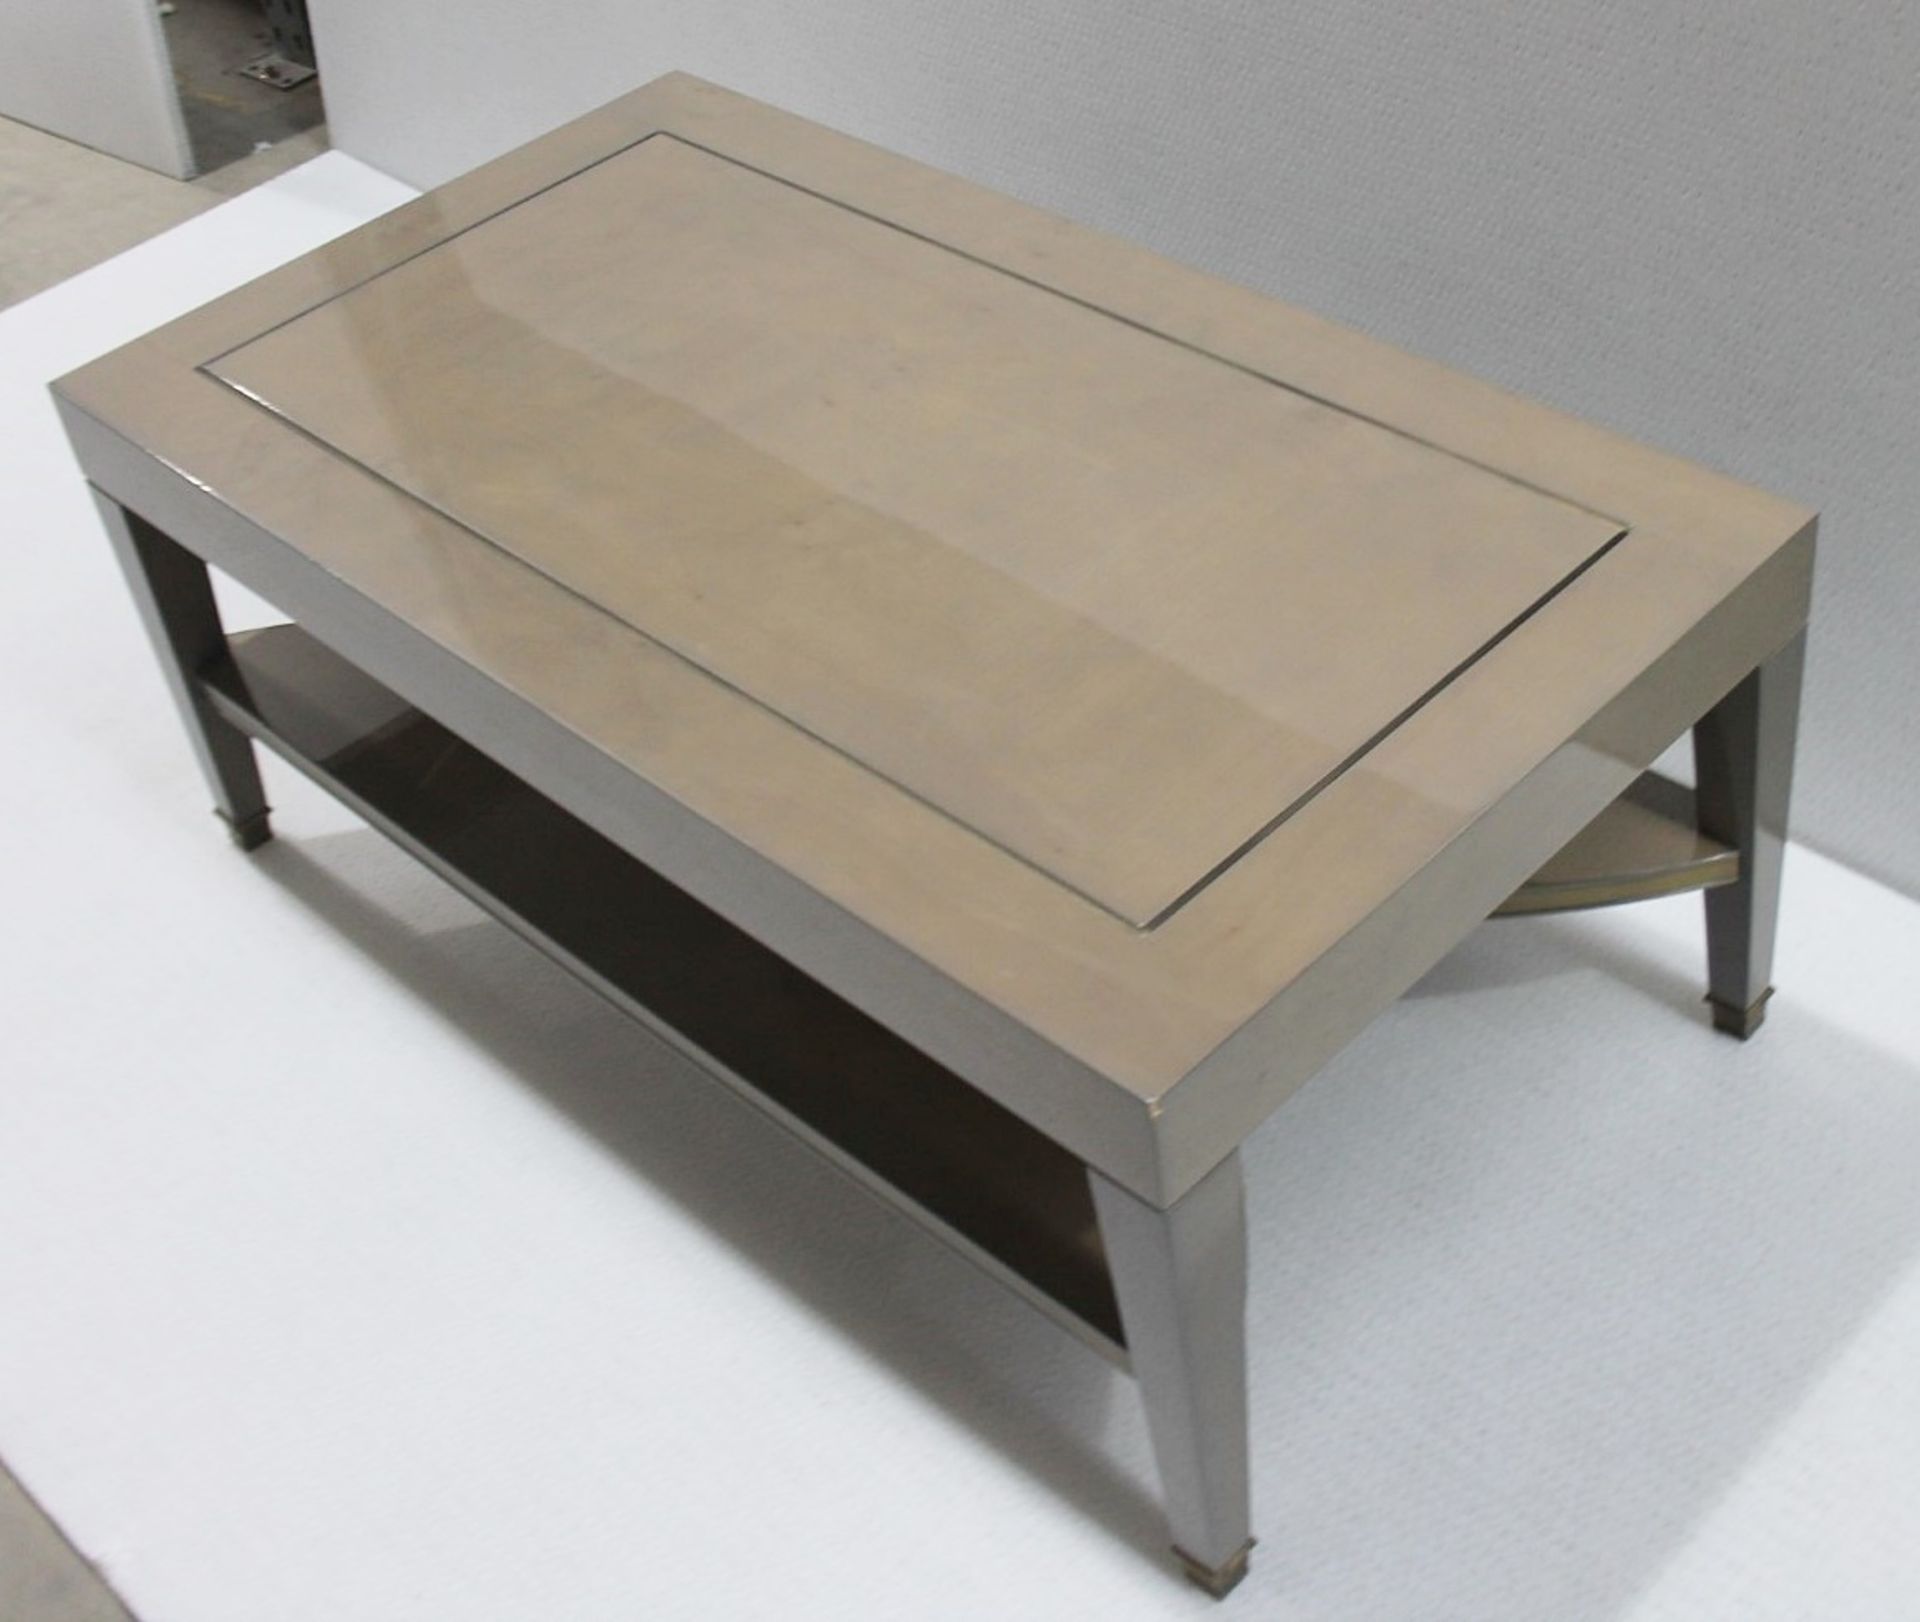 1 x JUSTIN VAN BREDA 'Legacy Alexander' Designer Lacquered Coffee Table With Undershelf - RRP £5,000 - Image 4 of 9